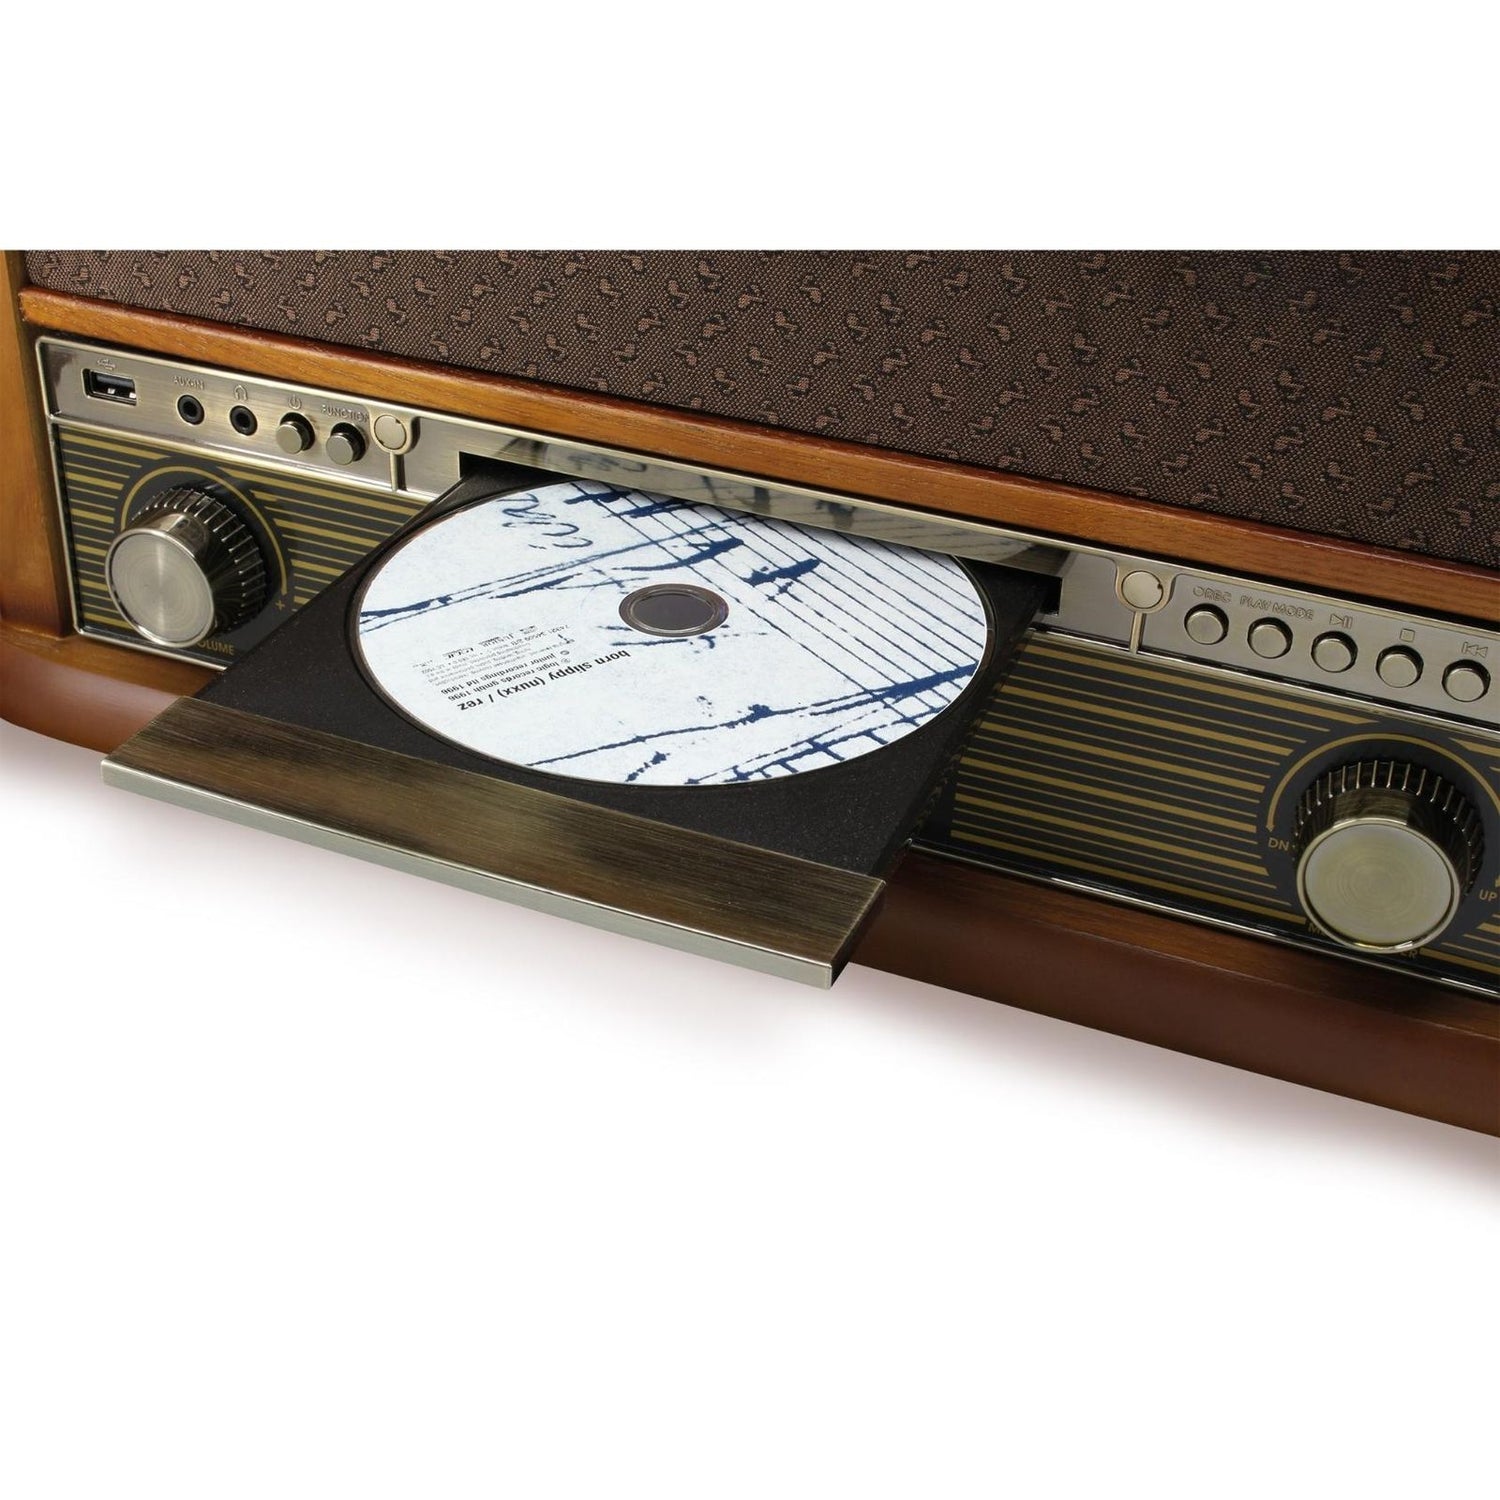 Soundmaster NR540 nostalgic compact system record player CD-MP3 USB encoding cassette player stereo system